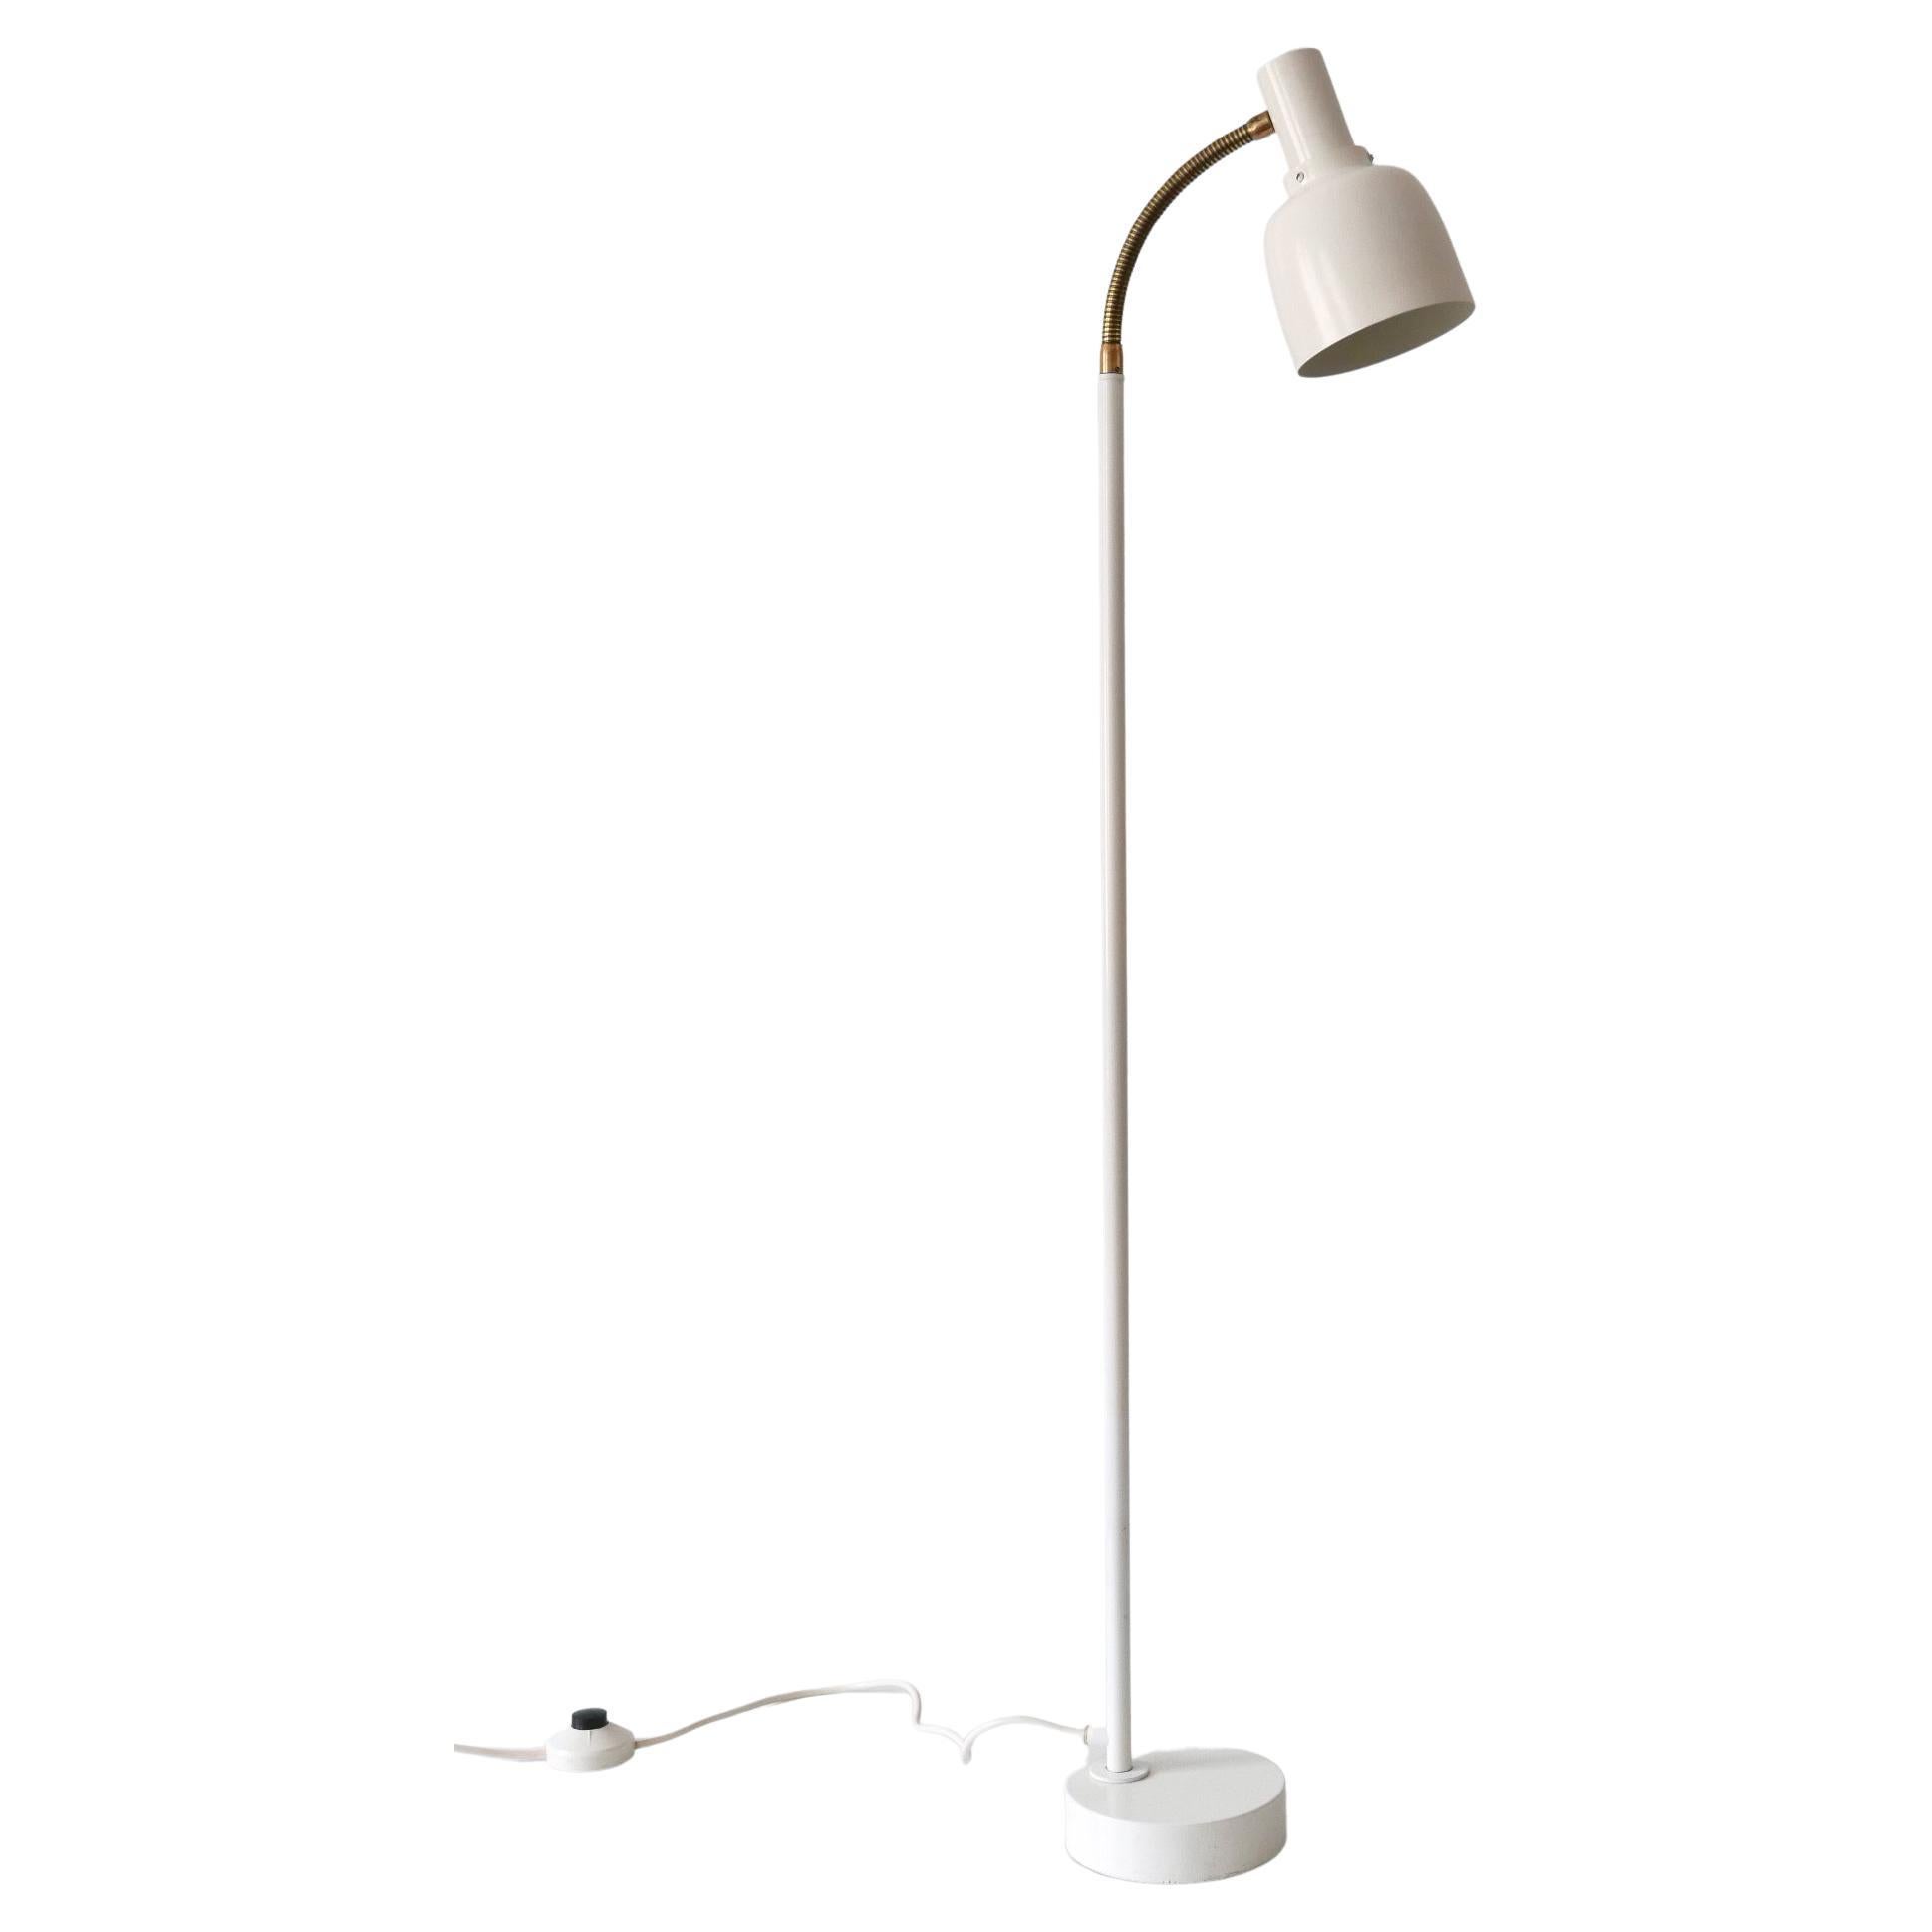 Rare Mid-Century Modern Floor Lamp or Reading Light by Hans-Agne Jakobsson 1960s For Sale